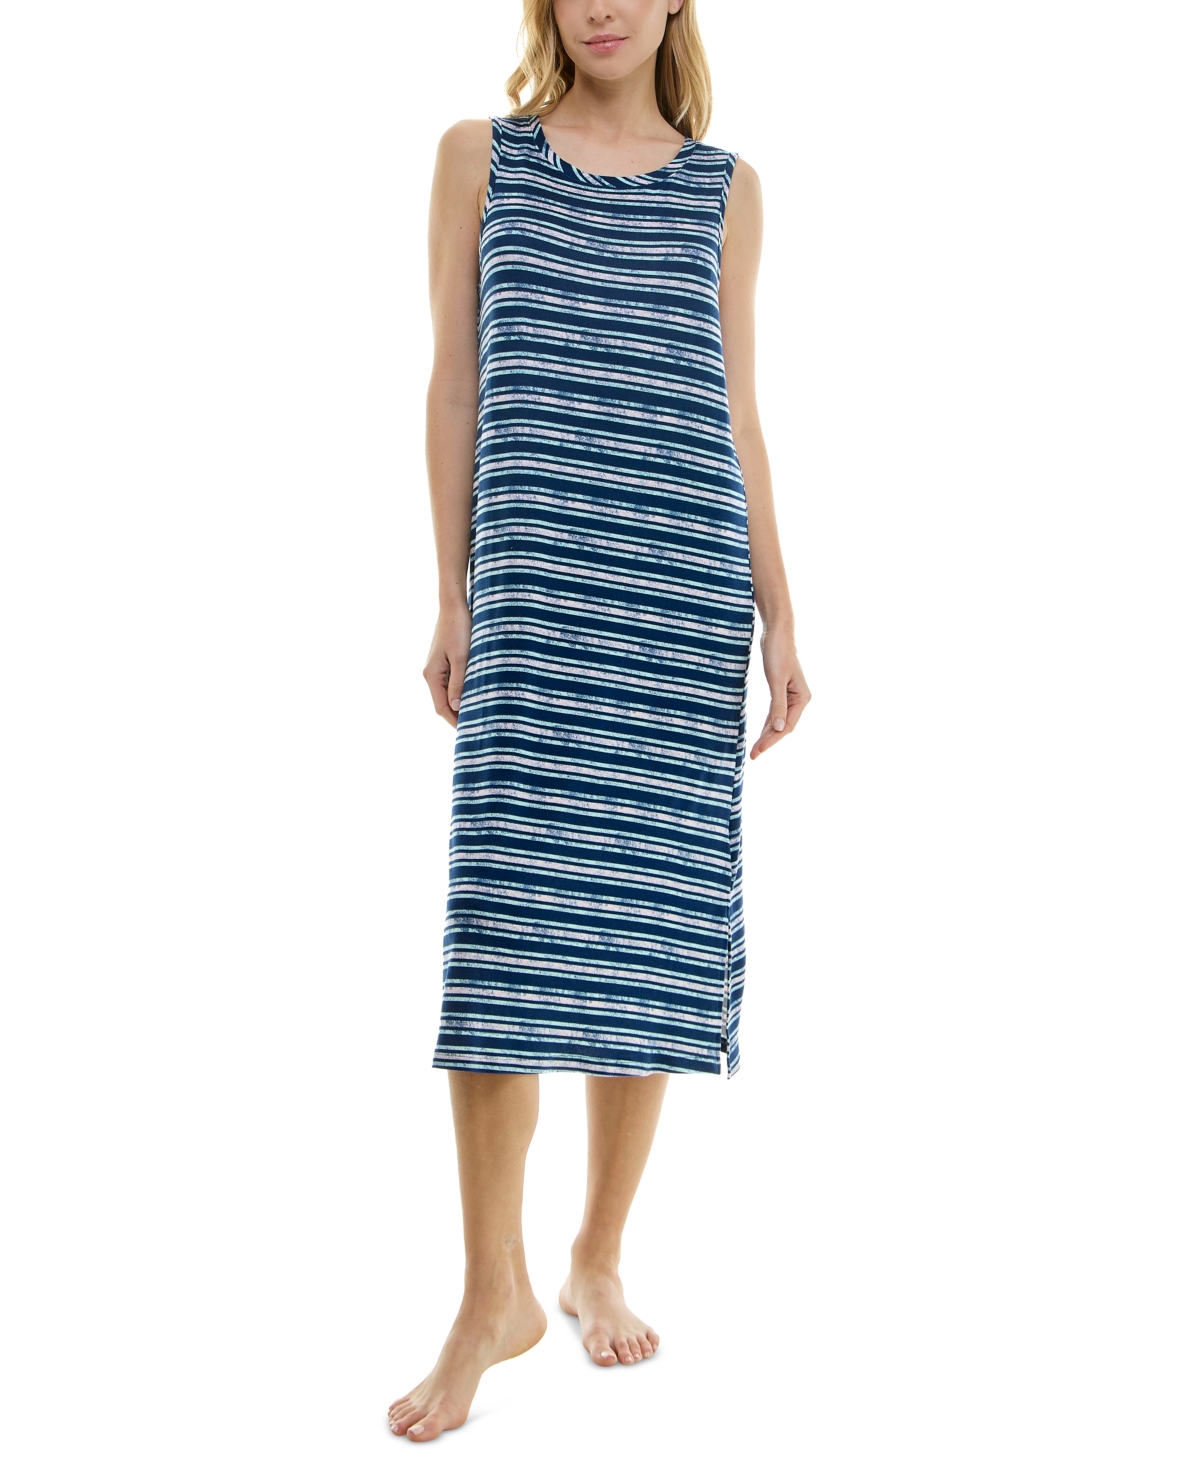 Women's Printed Sleeveless Nightgown - Quartz Stripe